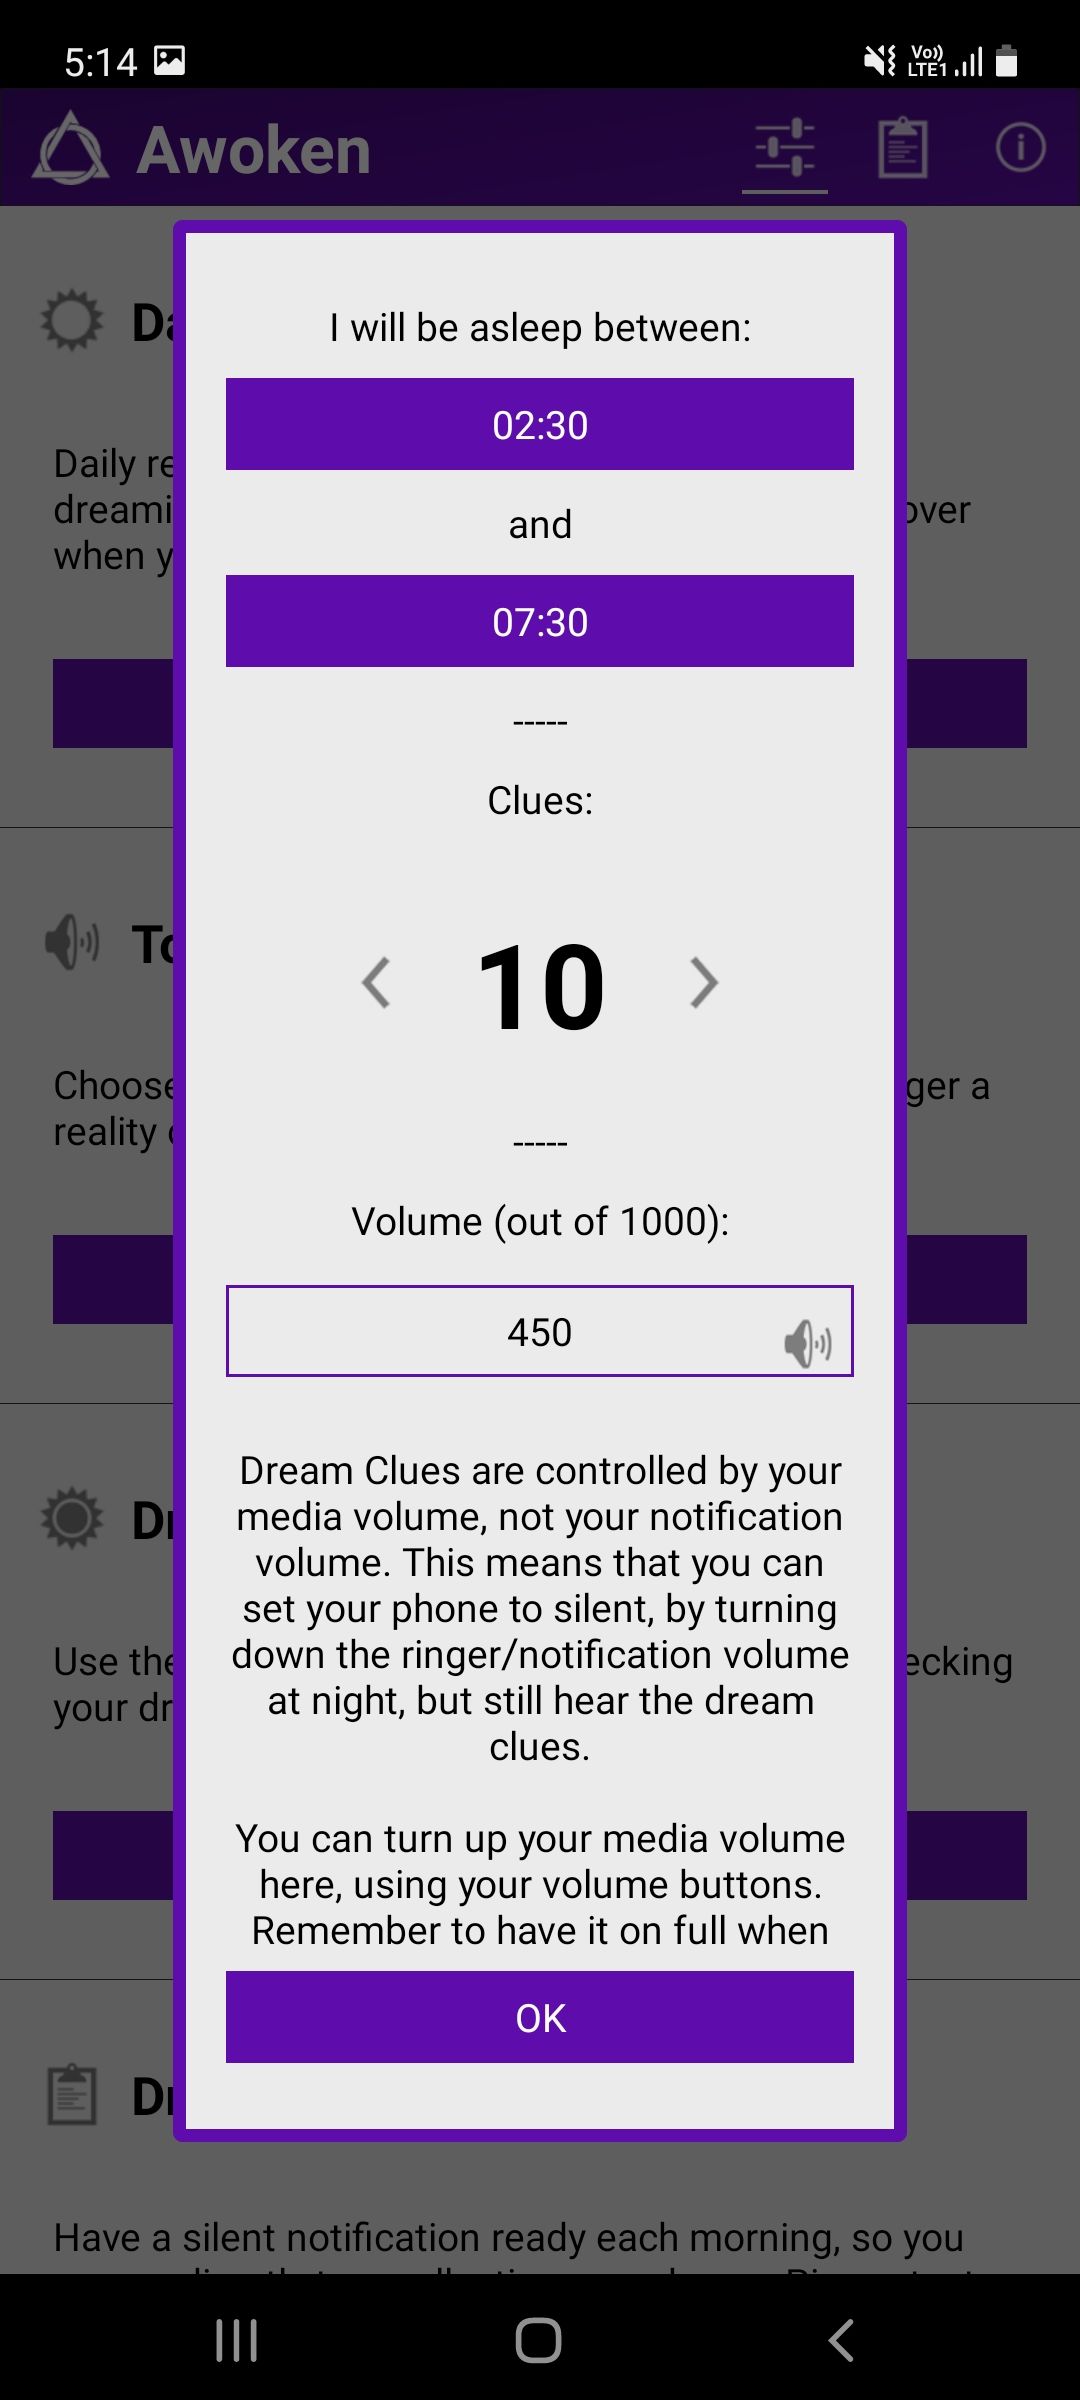 awoken app dream clues